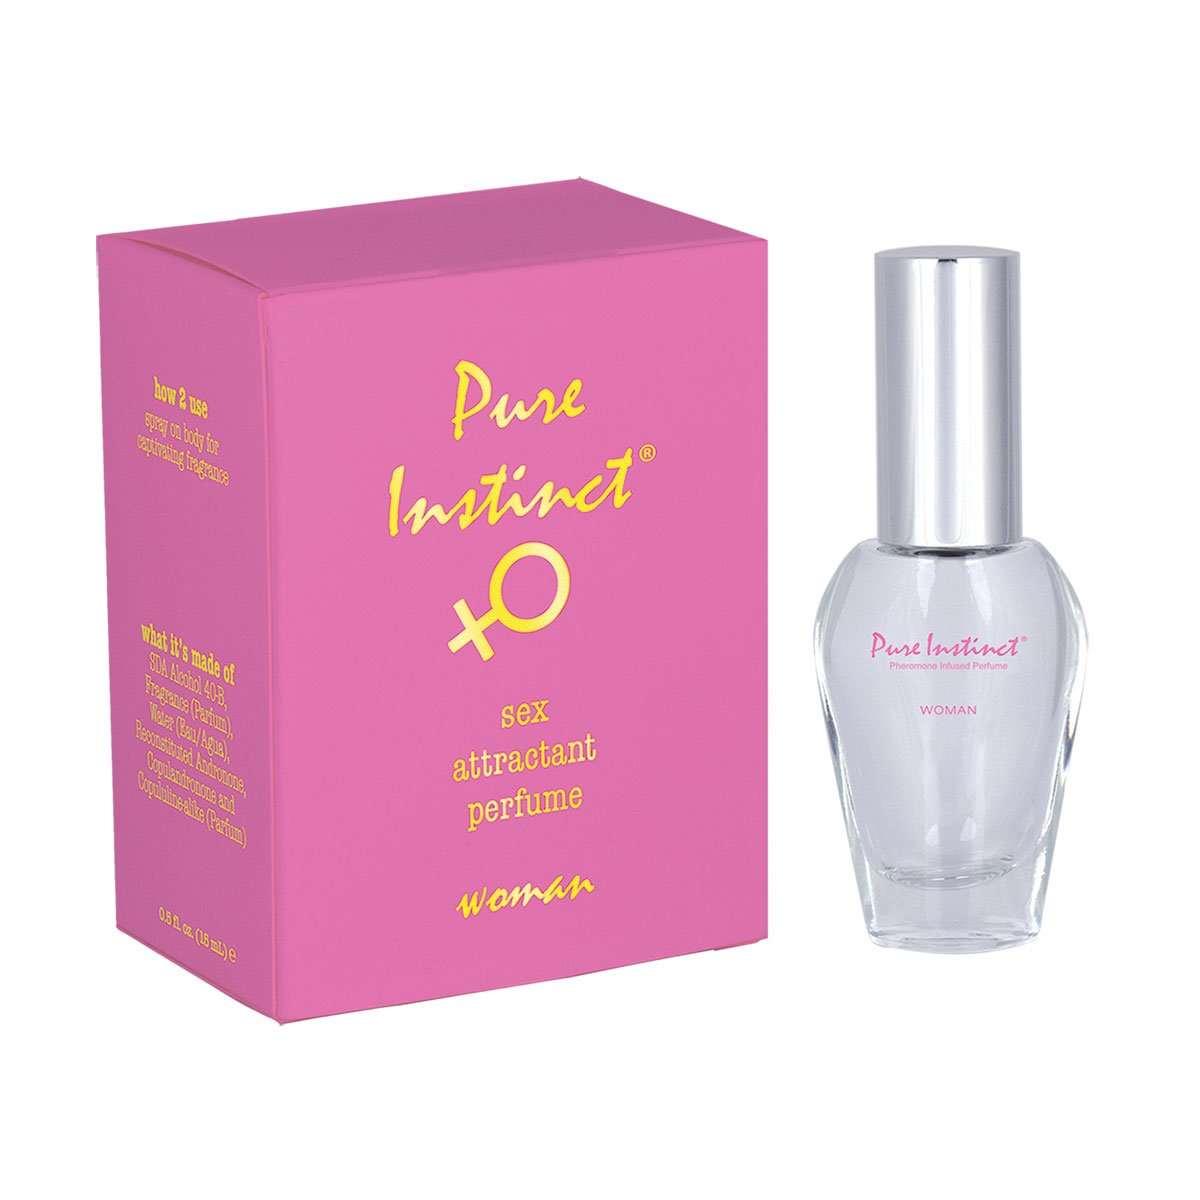 Jelique Pure Instinct Woman Perfume 1oz